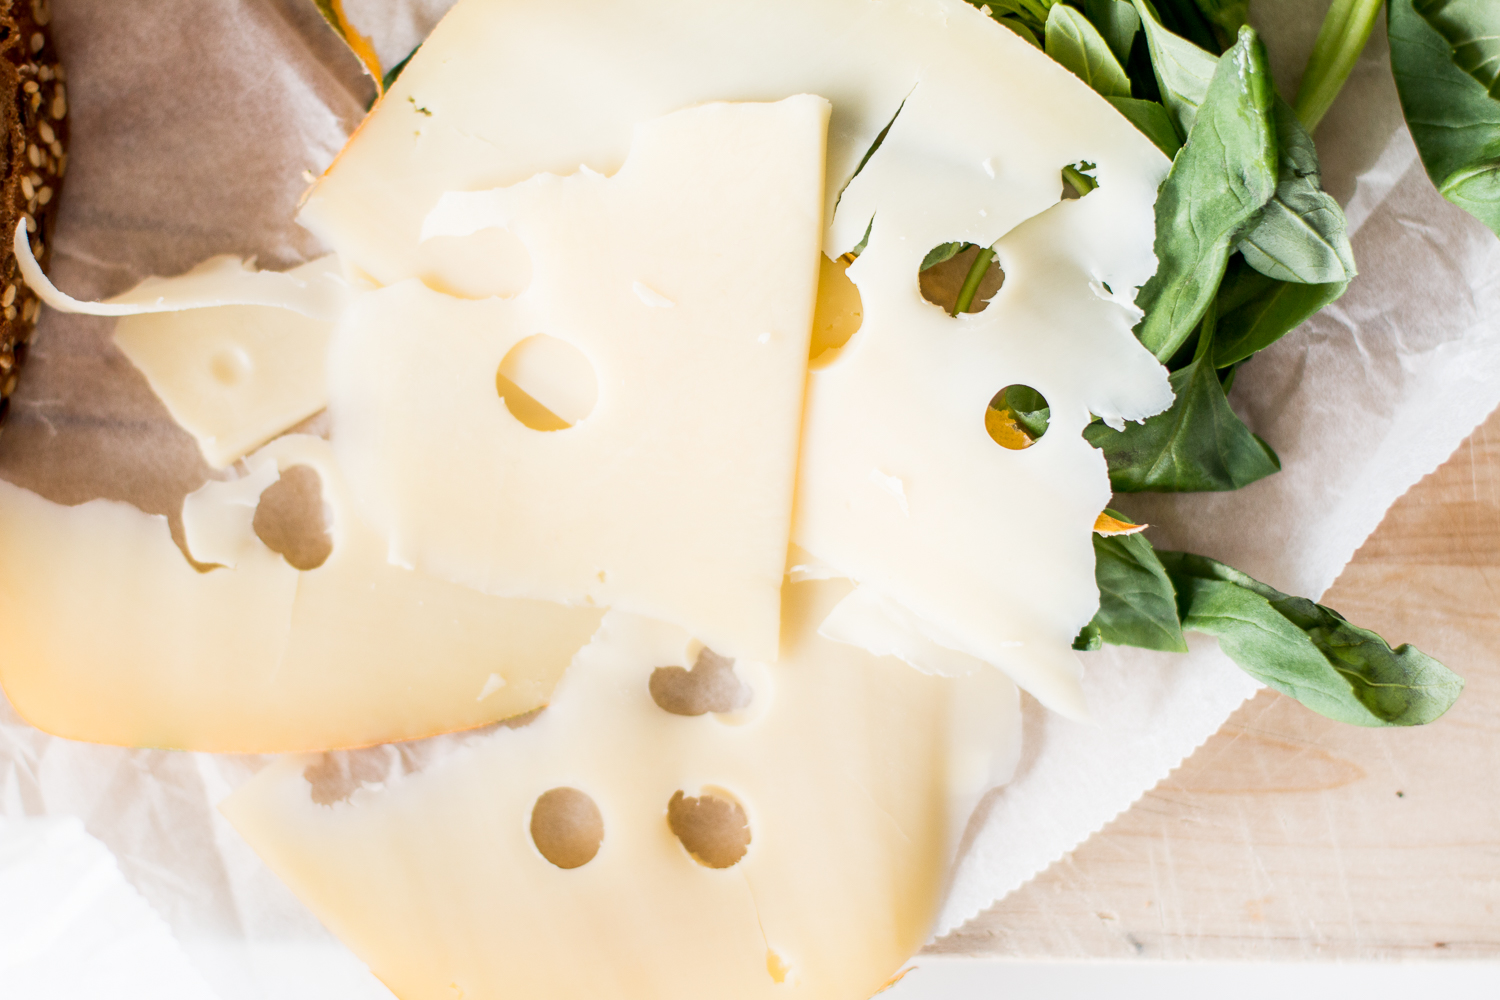 Italian Grilled Cheese Sandwich - Leerdammer #wirkäsebroten | Love Daily Dose